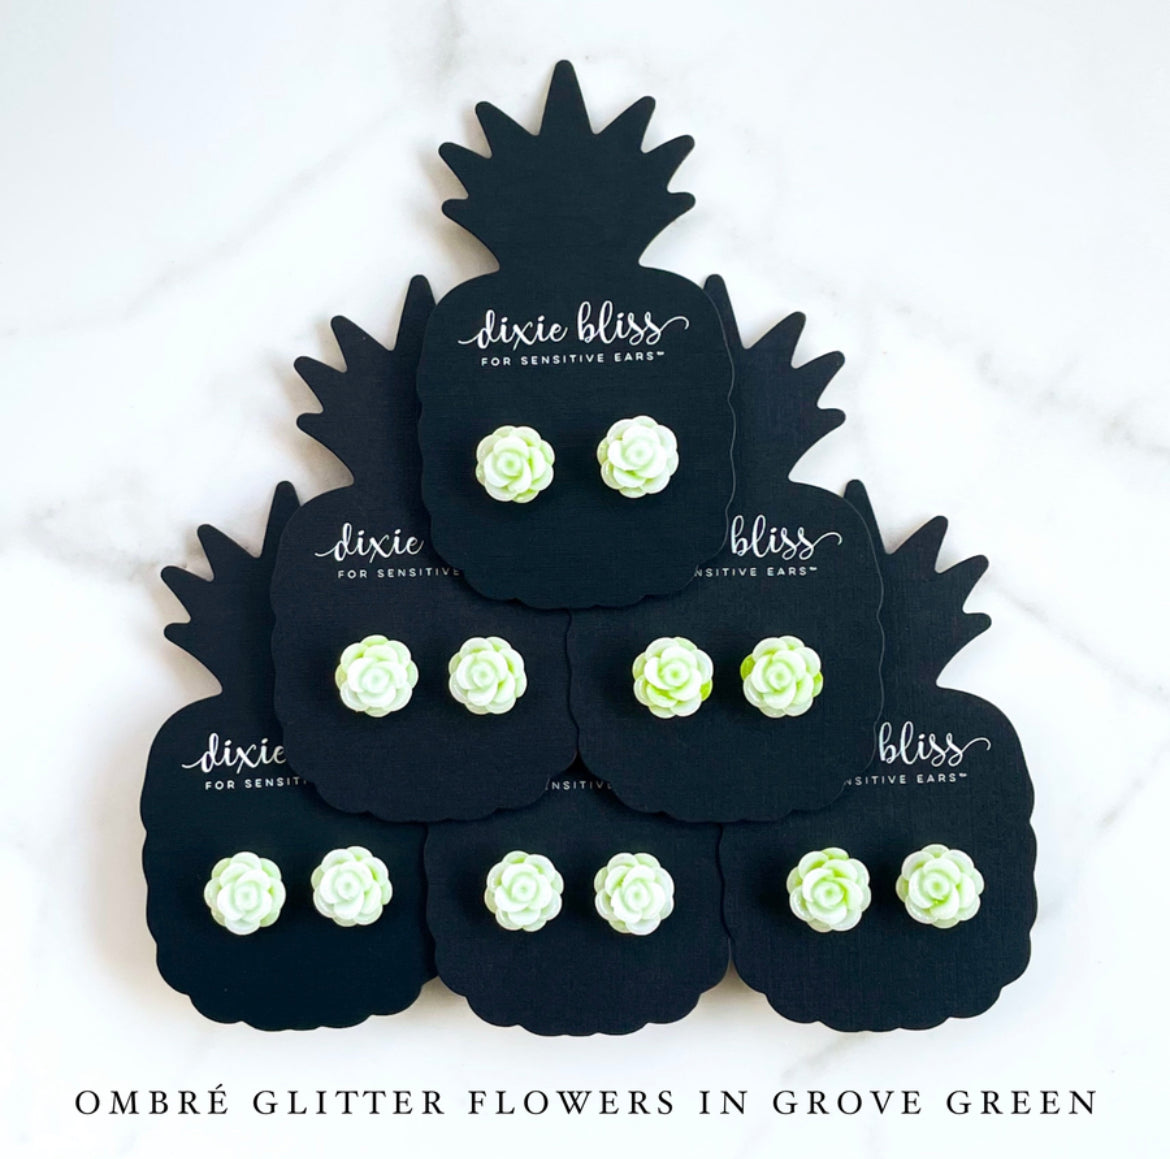 Ombre Glitter Flowers in Grove Green - Dixie Bliss - Stud Earrings